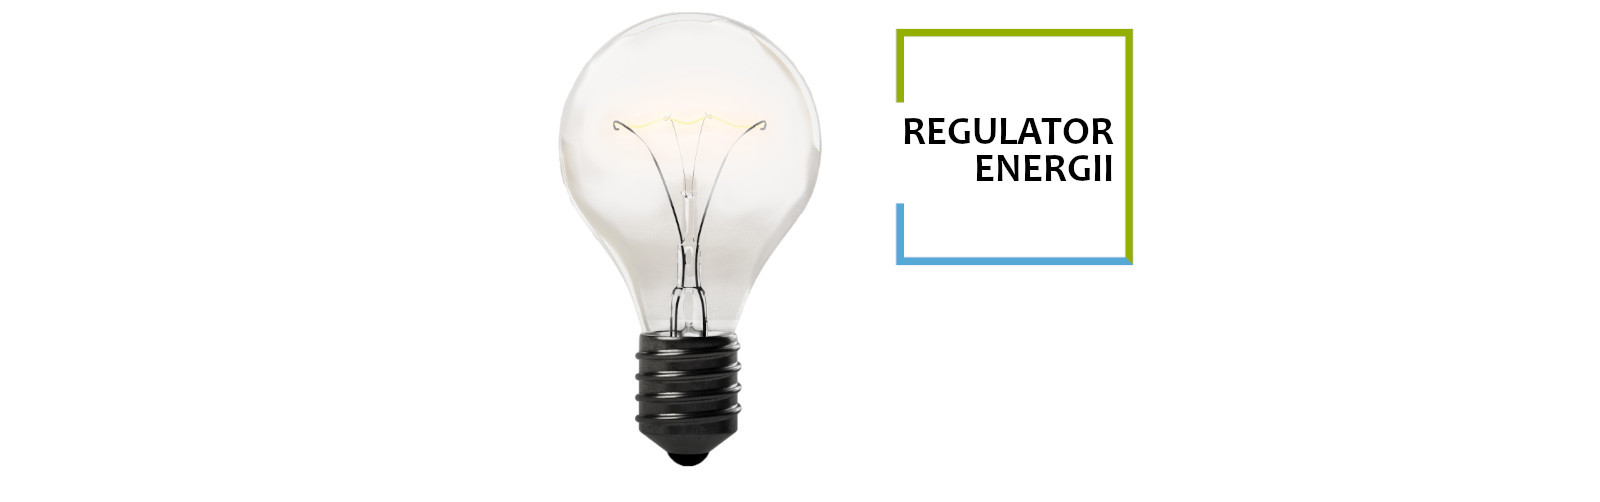 Inteligenty regulator energii